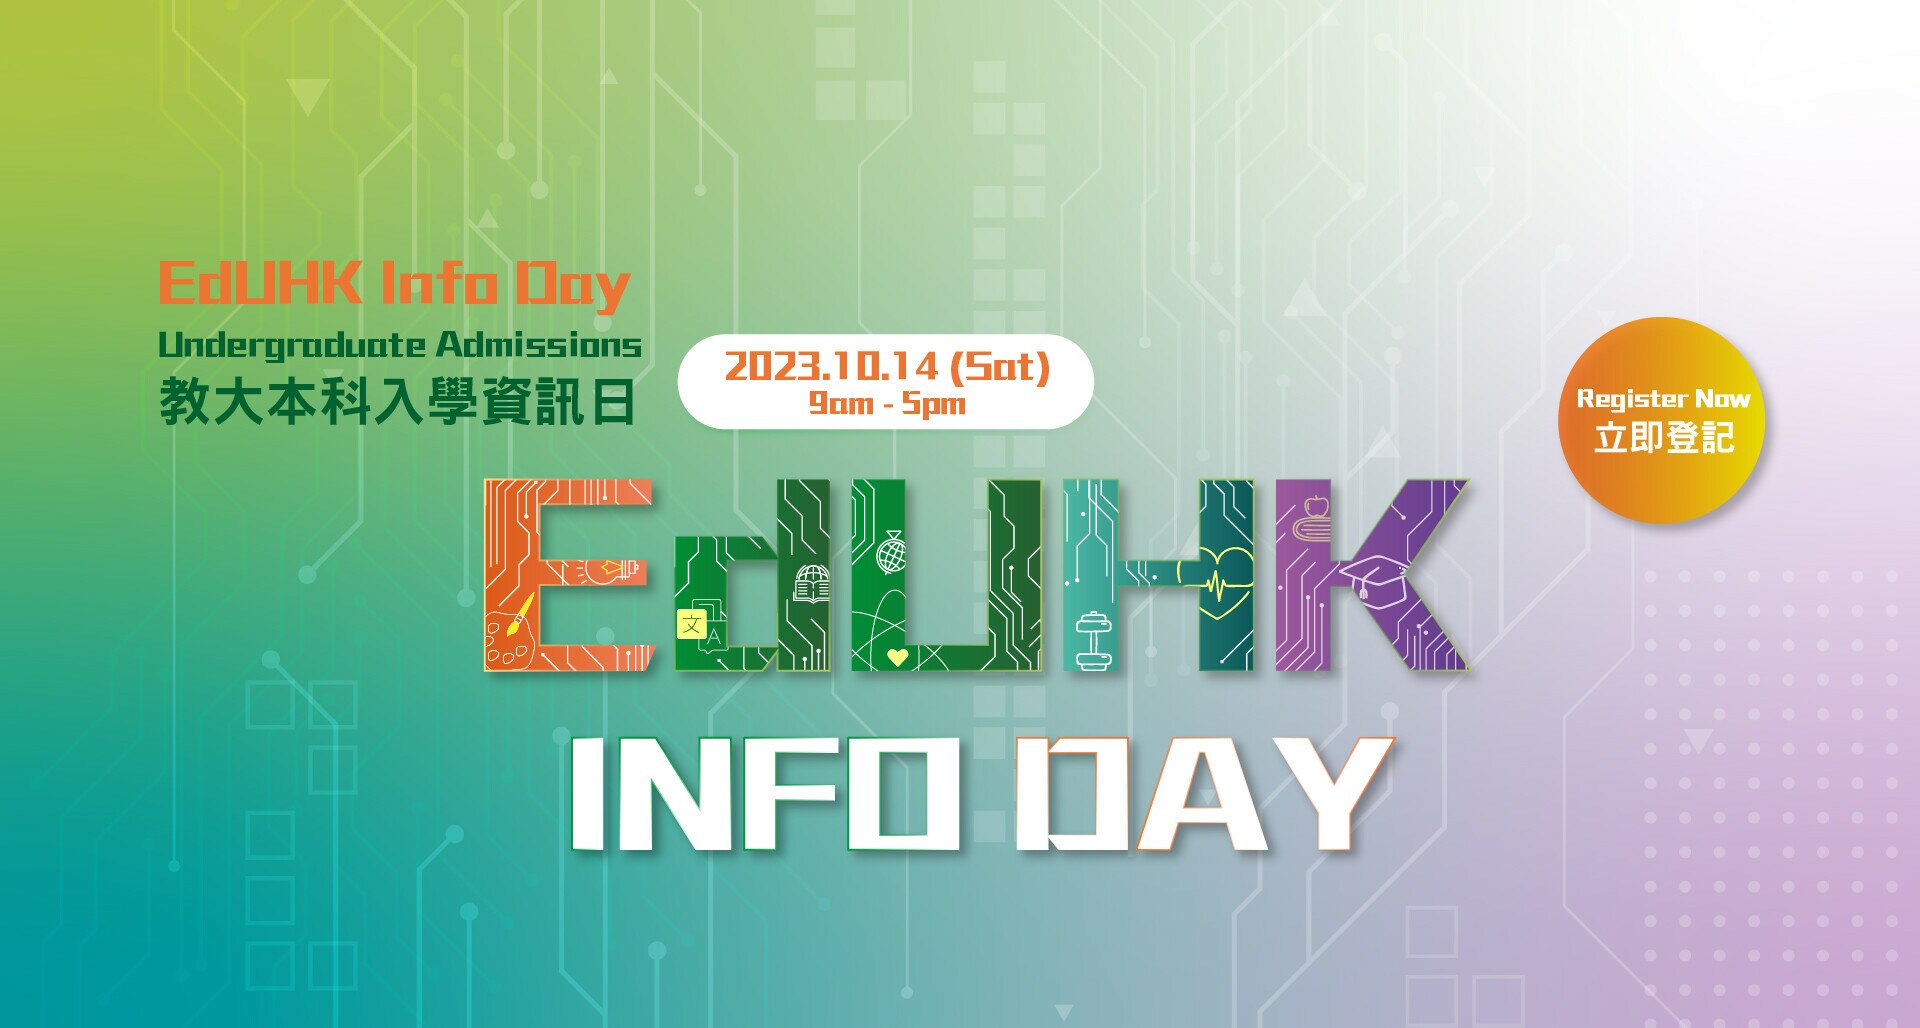 EdUHK Information Day 2023